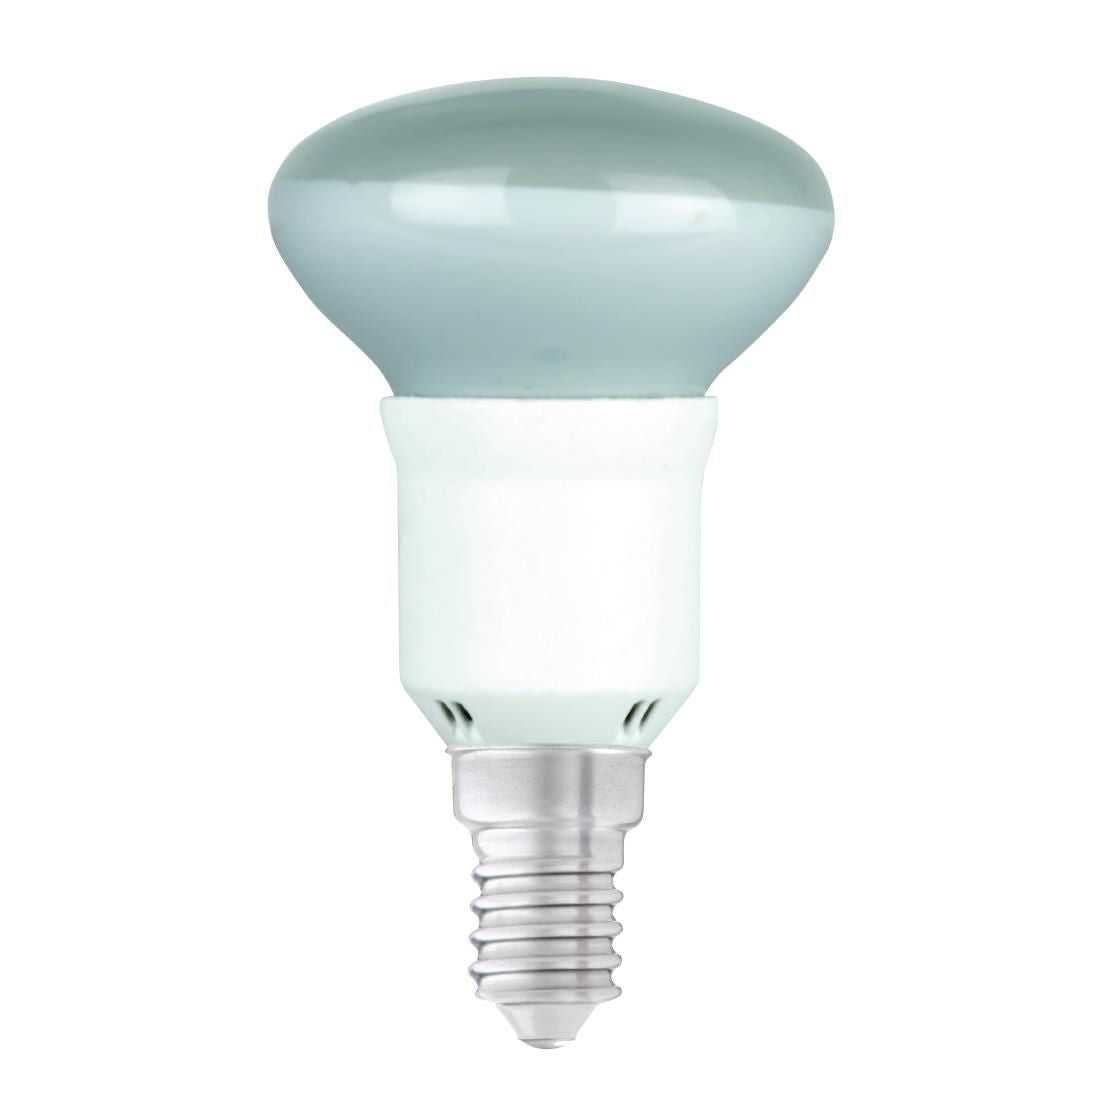 CW942 Status LED SES Pearl Warm White R50 Reflector Spotlight Bulb 6W